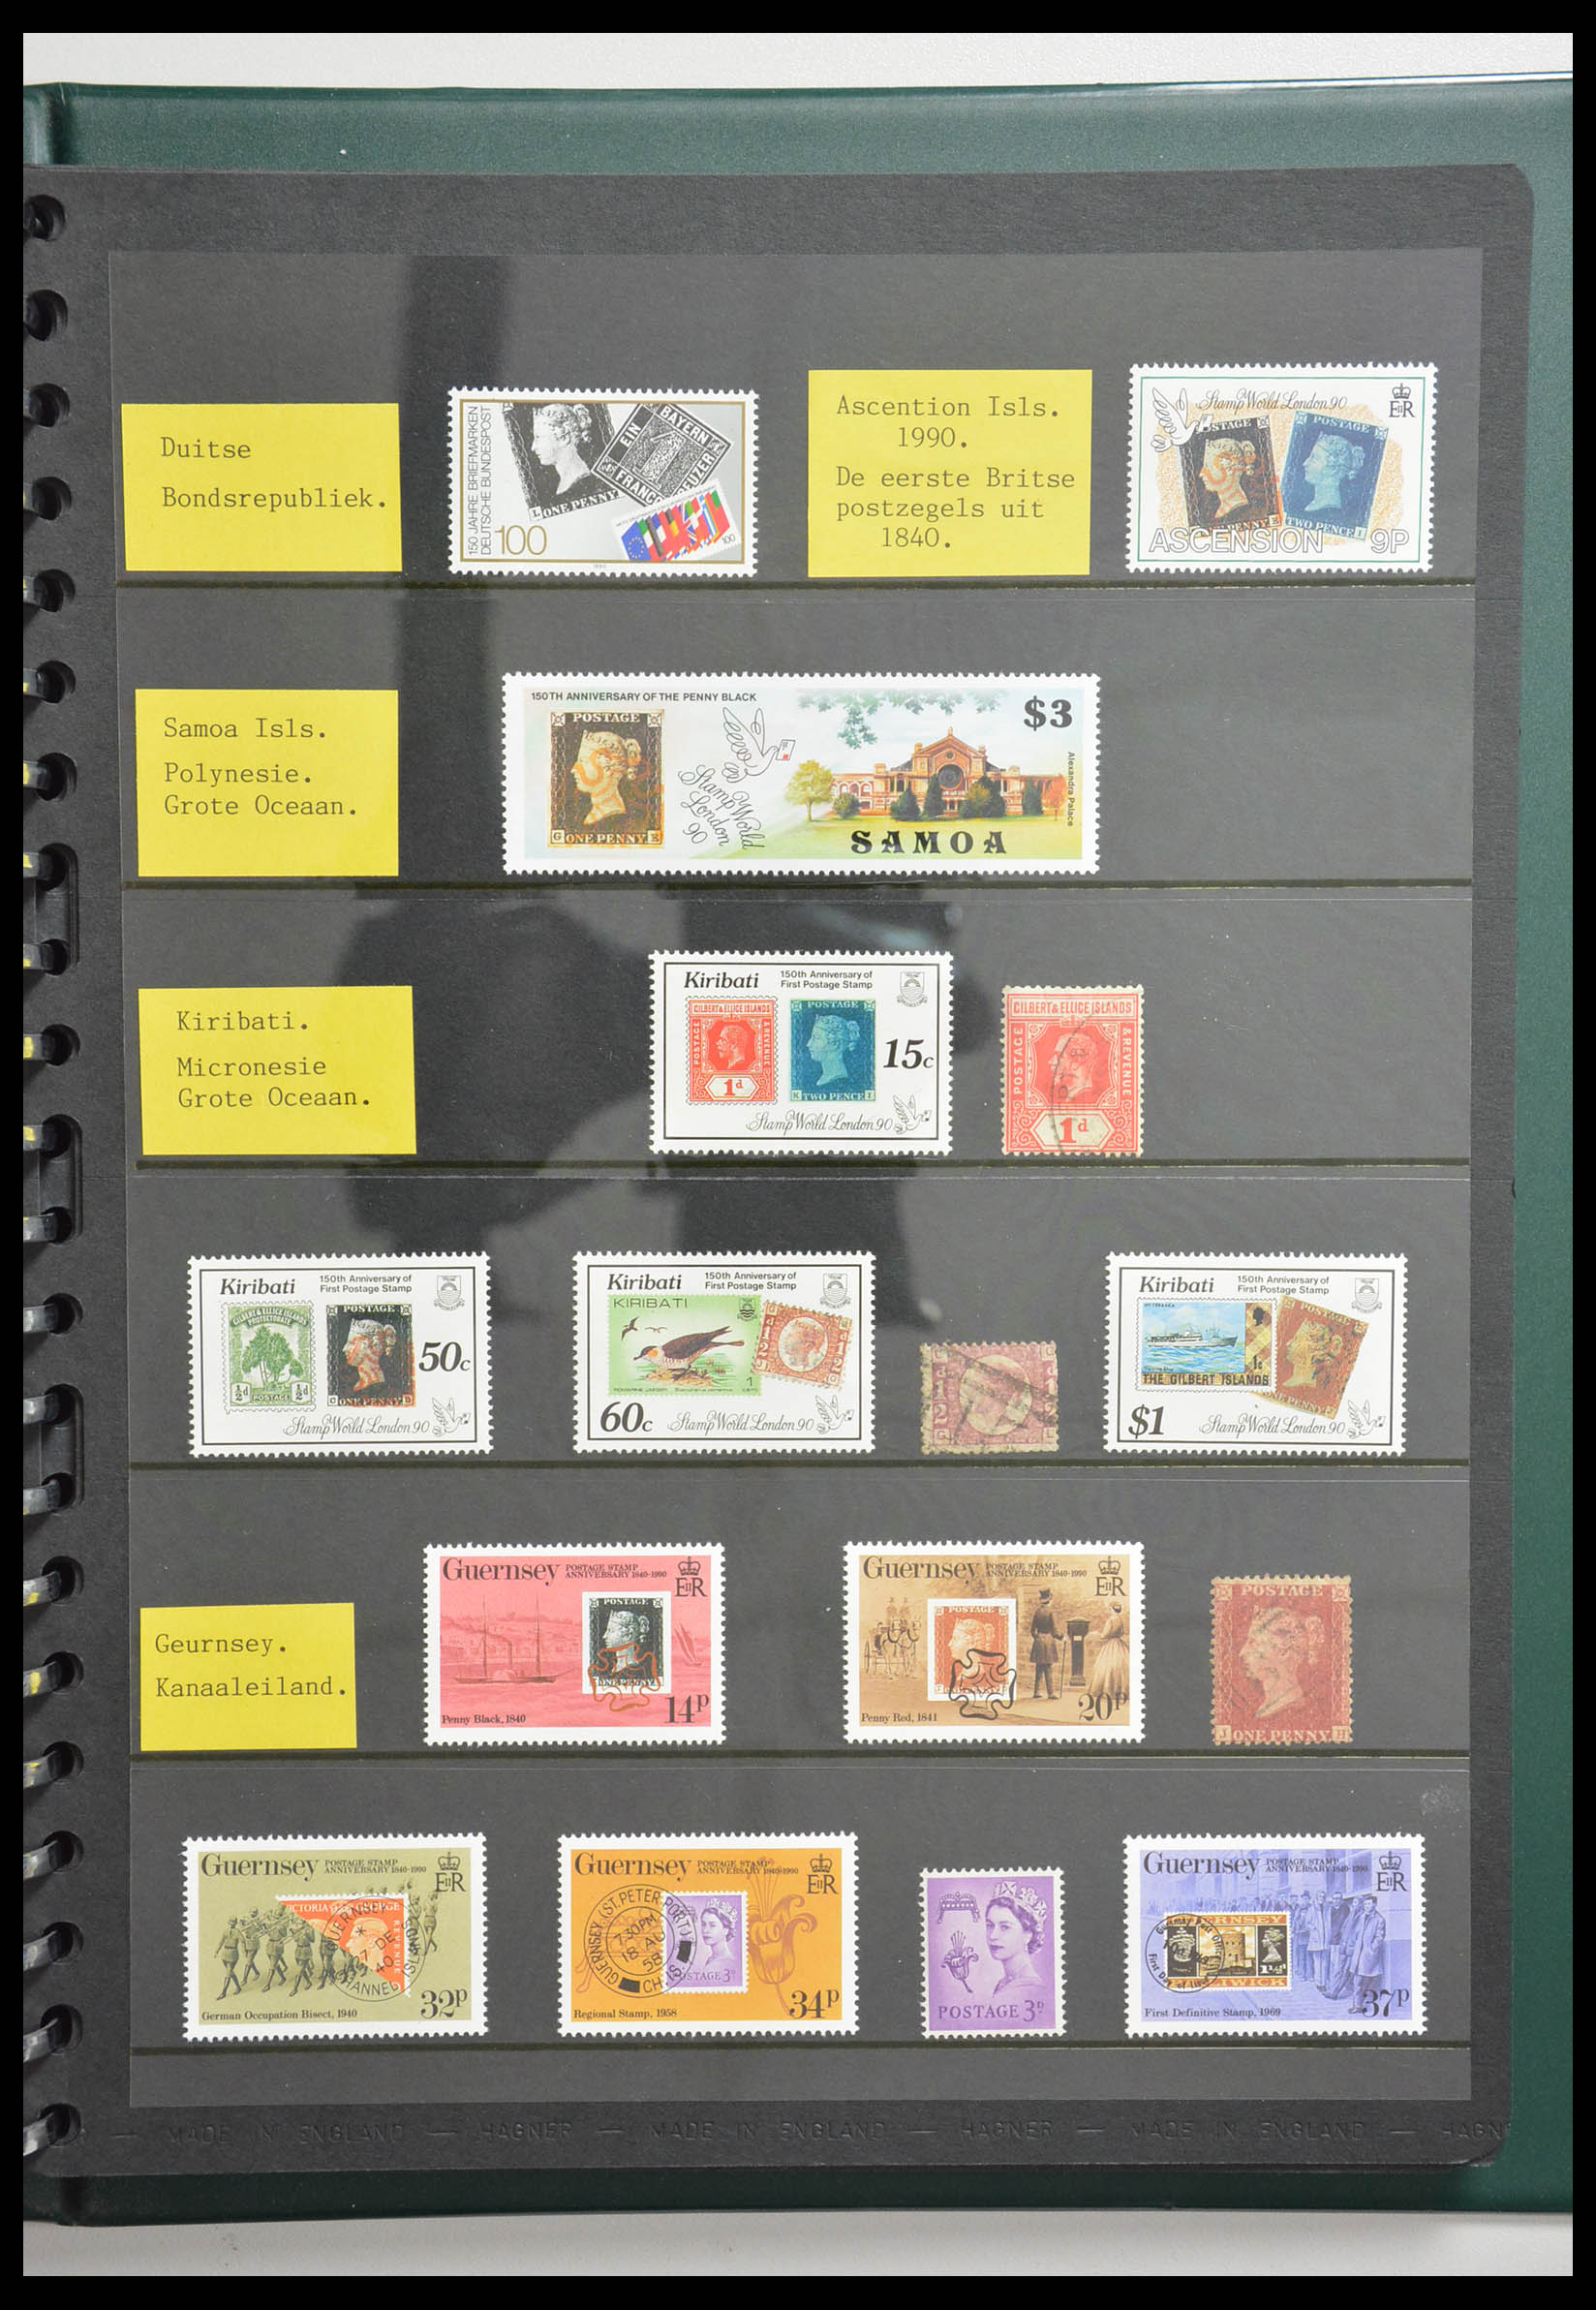 28337 033 - 28337 Postzegel op postzegel 1840-2001.